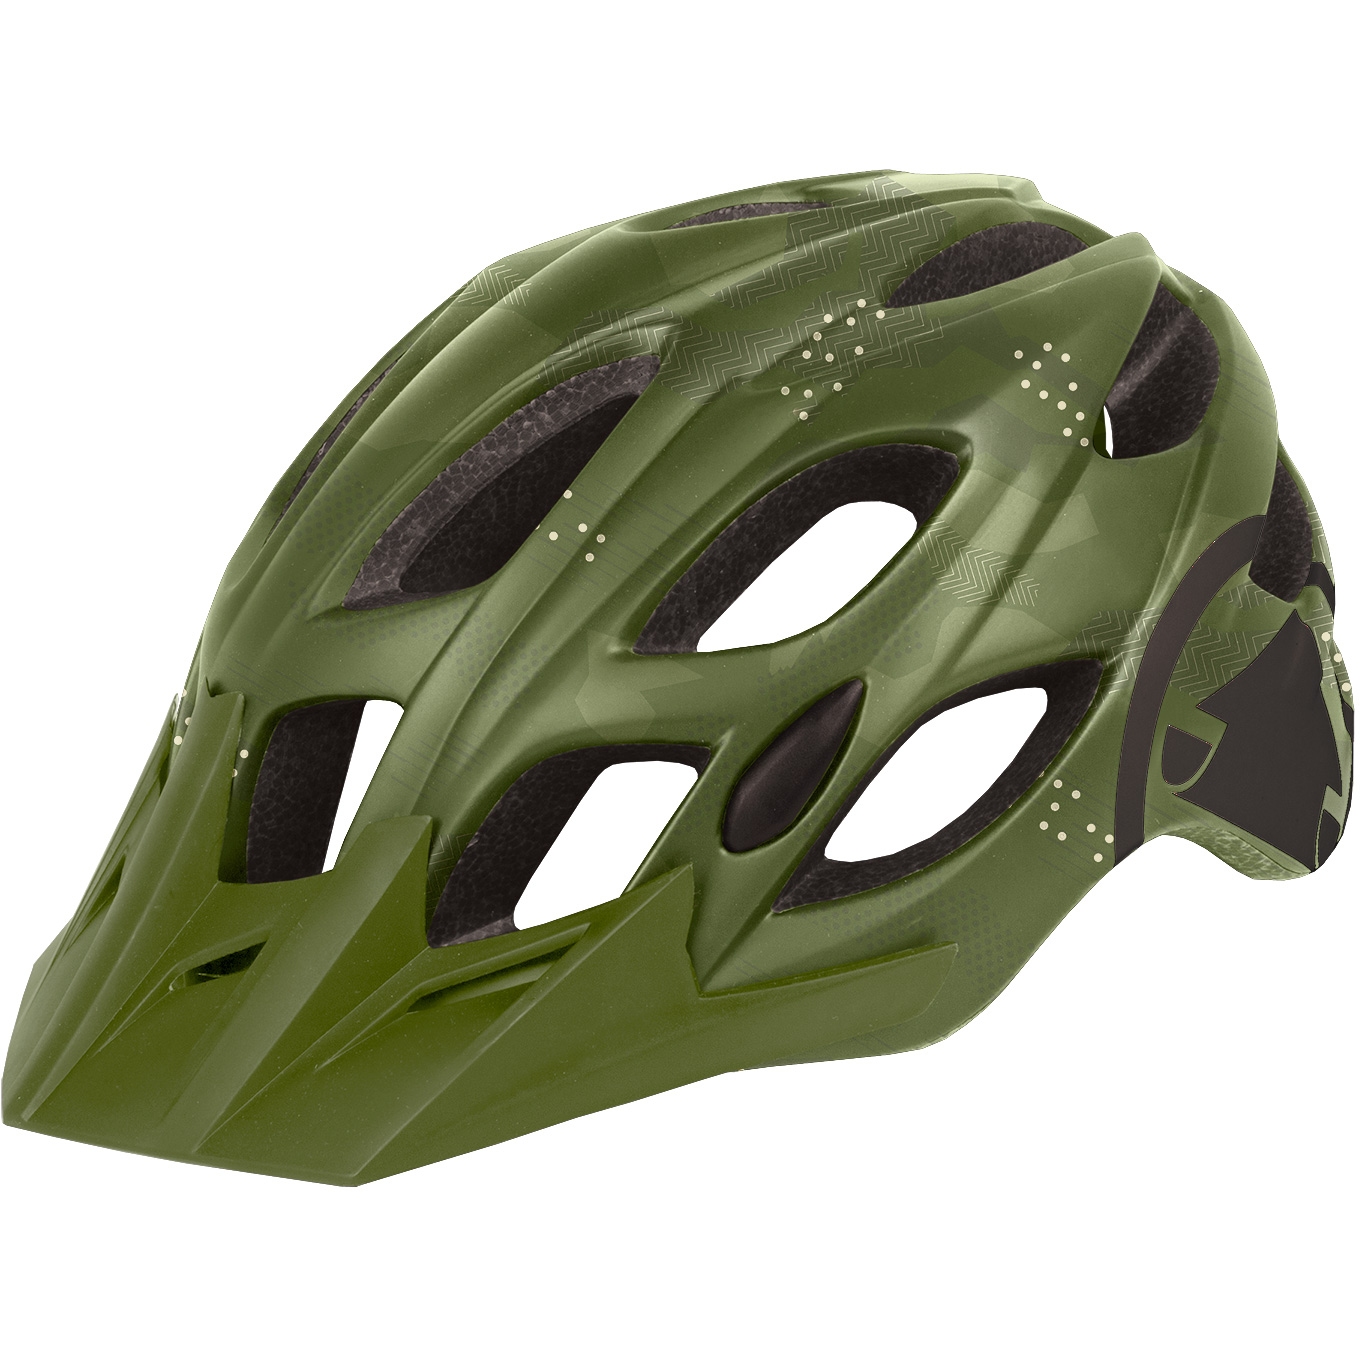 Produktbild von Endura Hummvee Helm - olivgrün